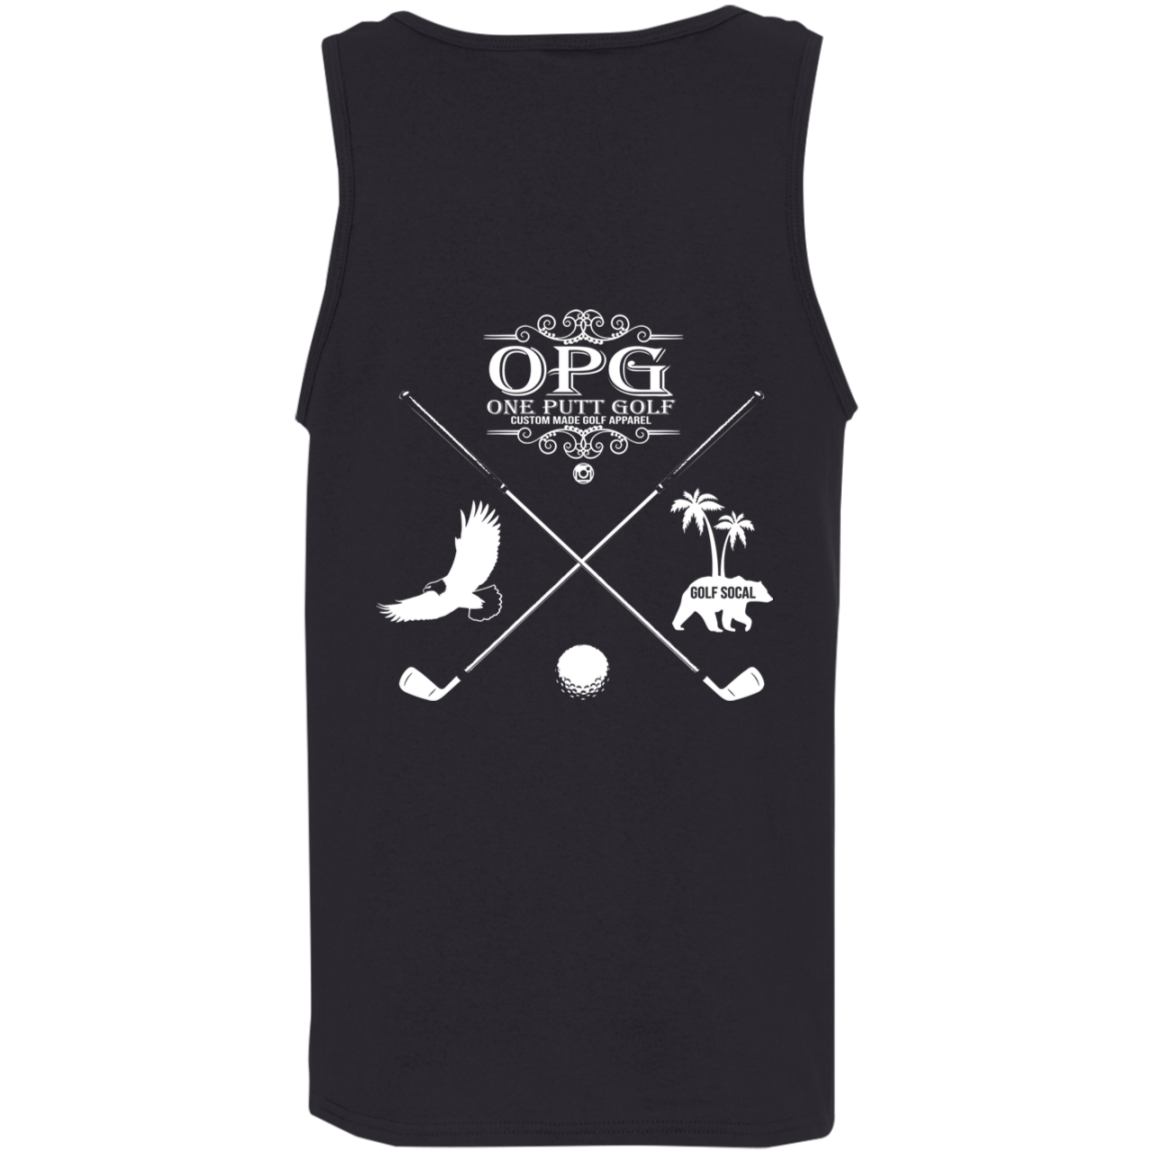 OPG Custom Design #8. Drive. 100% Cotton Preshrunk Jersey Knit Tank Top